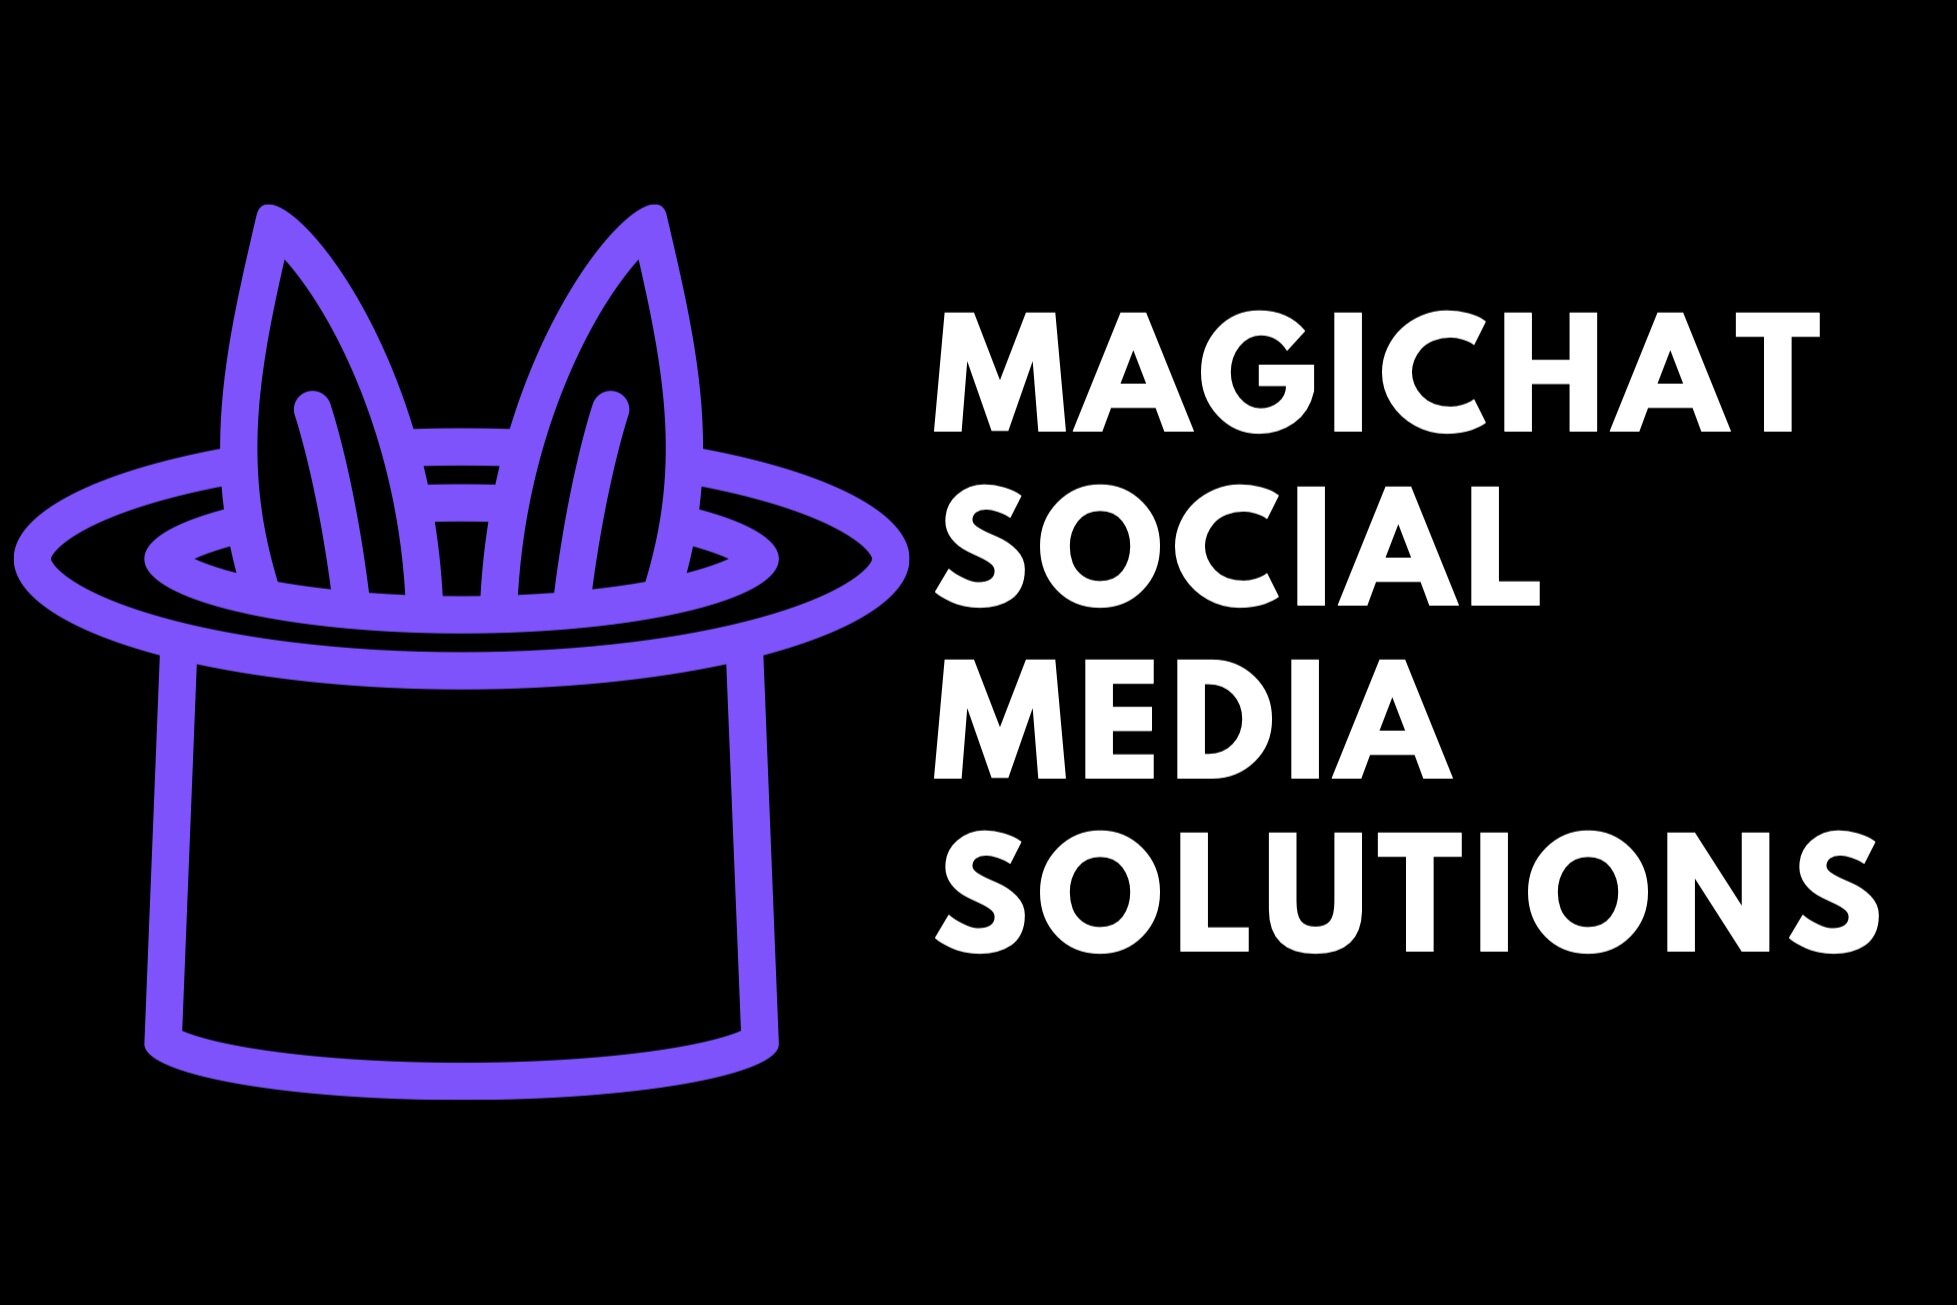 MagicHat Social Media Solutions